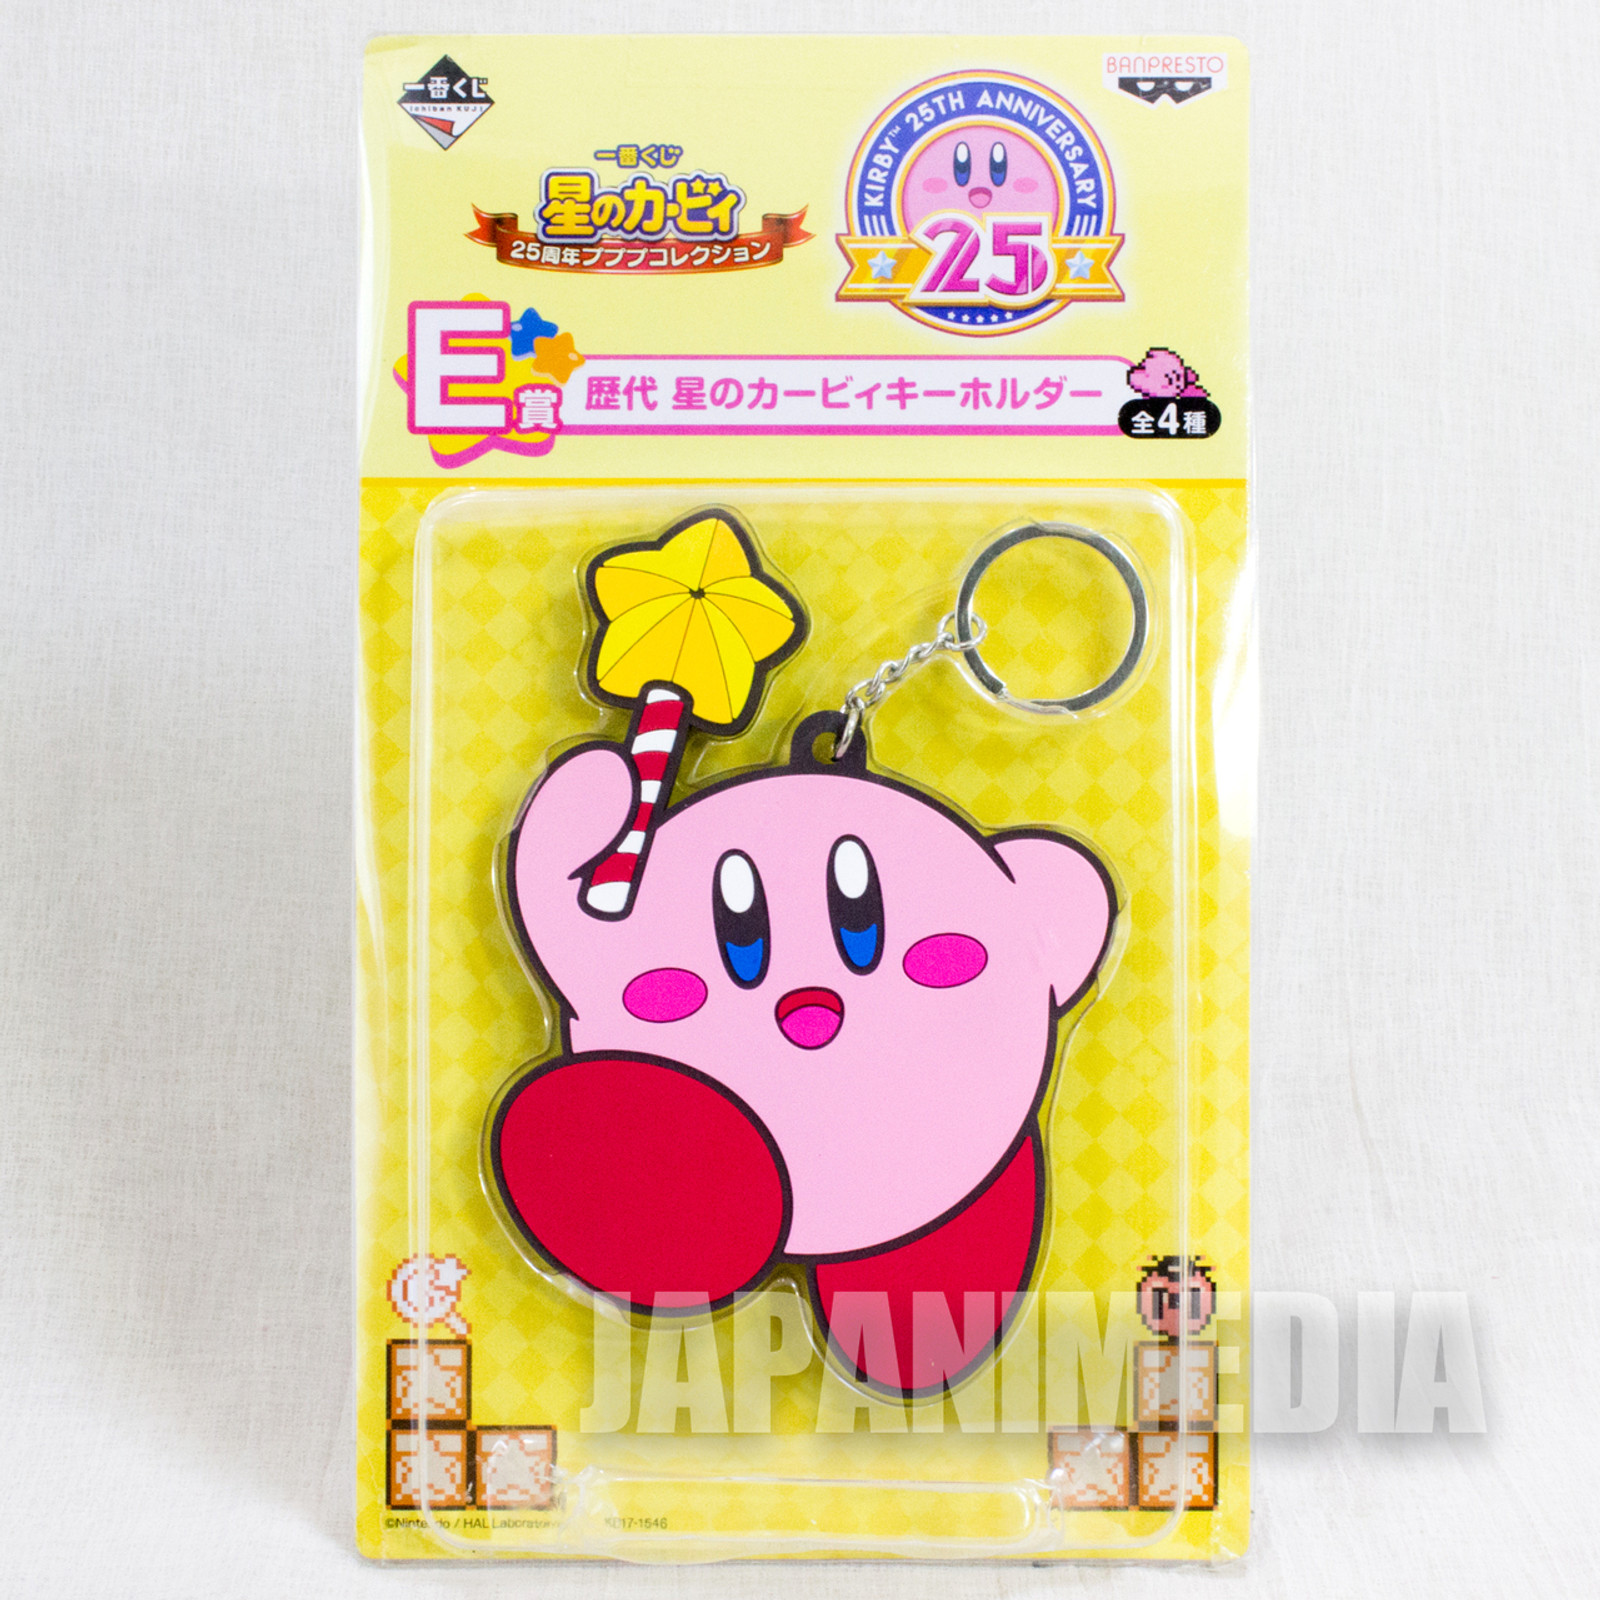 Kirby Super Star Jumping Ver. Big Rubber Mascot Key Chain Banpresto JAPAN GAME